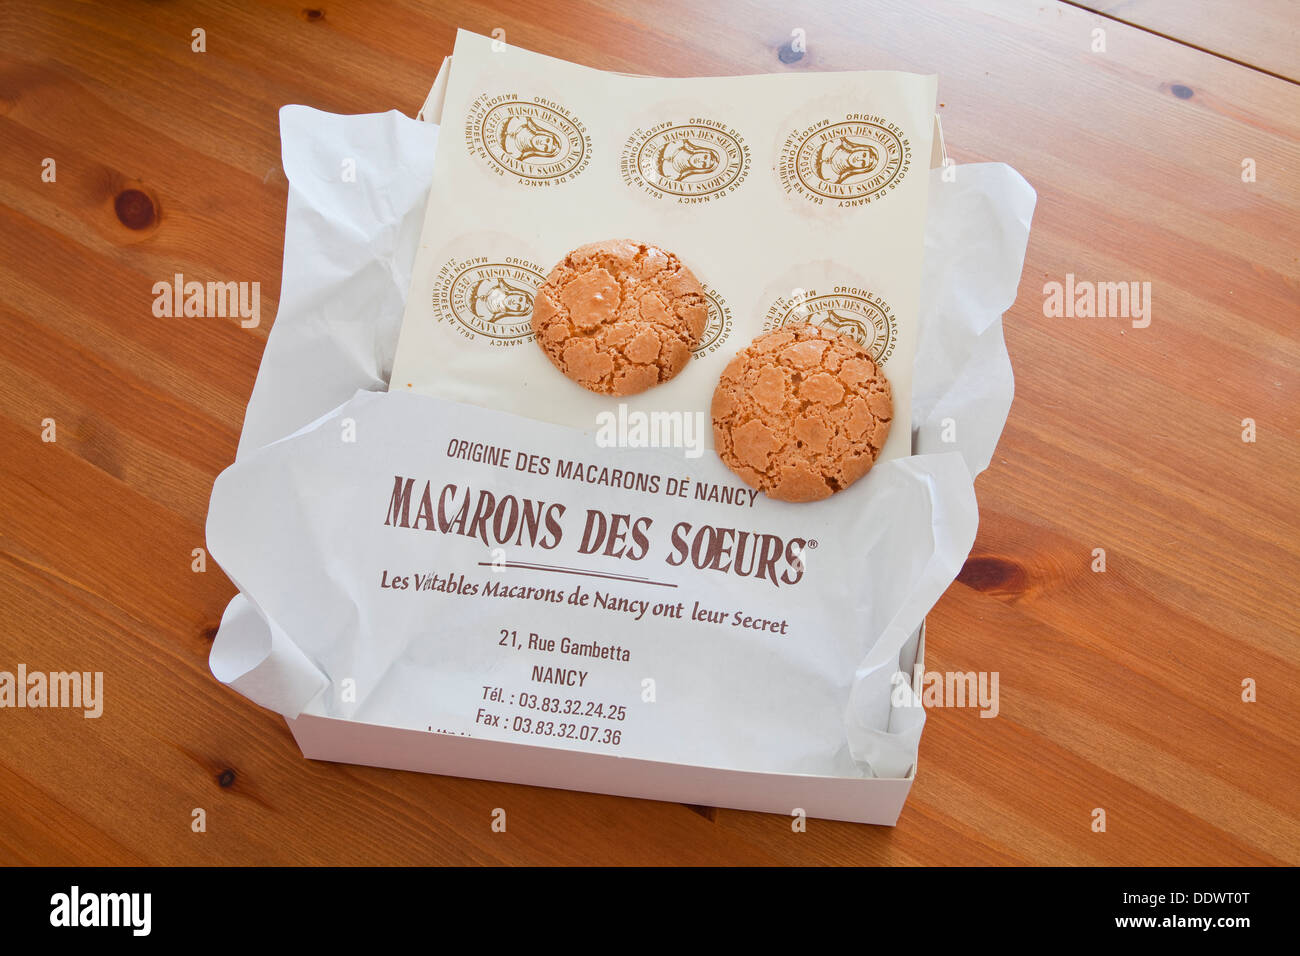 Macarons des Soeurs of Nancy. Stock Photo